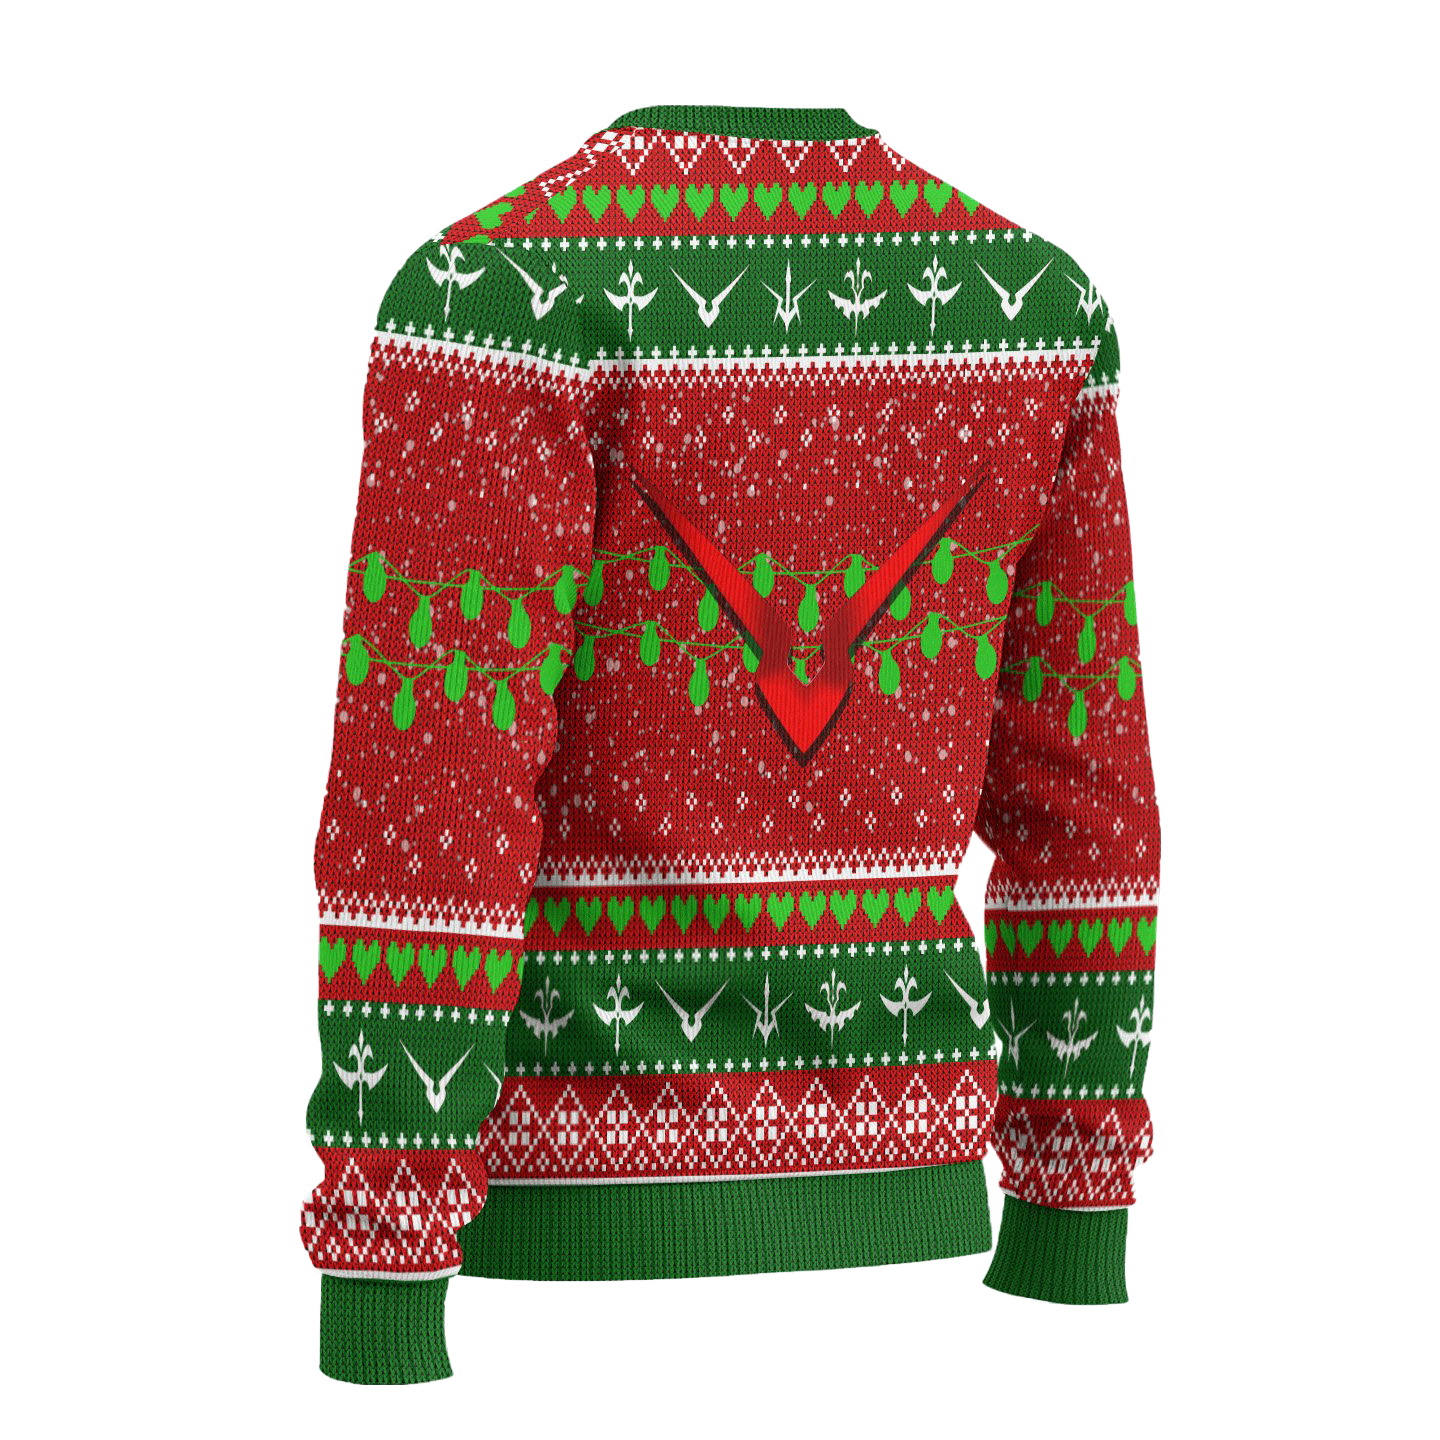 Code Geass Anime Ugly Christmas Sweater Custom Characters Xmas Gift